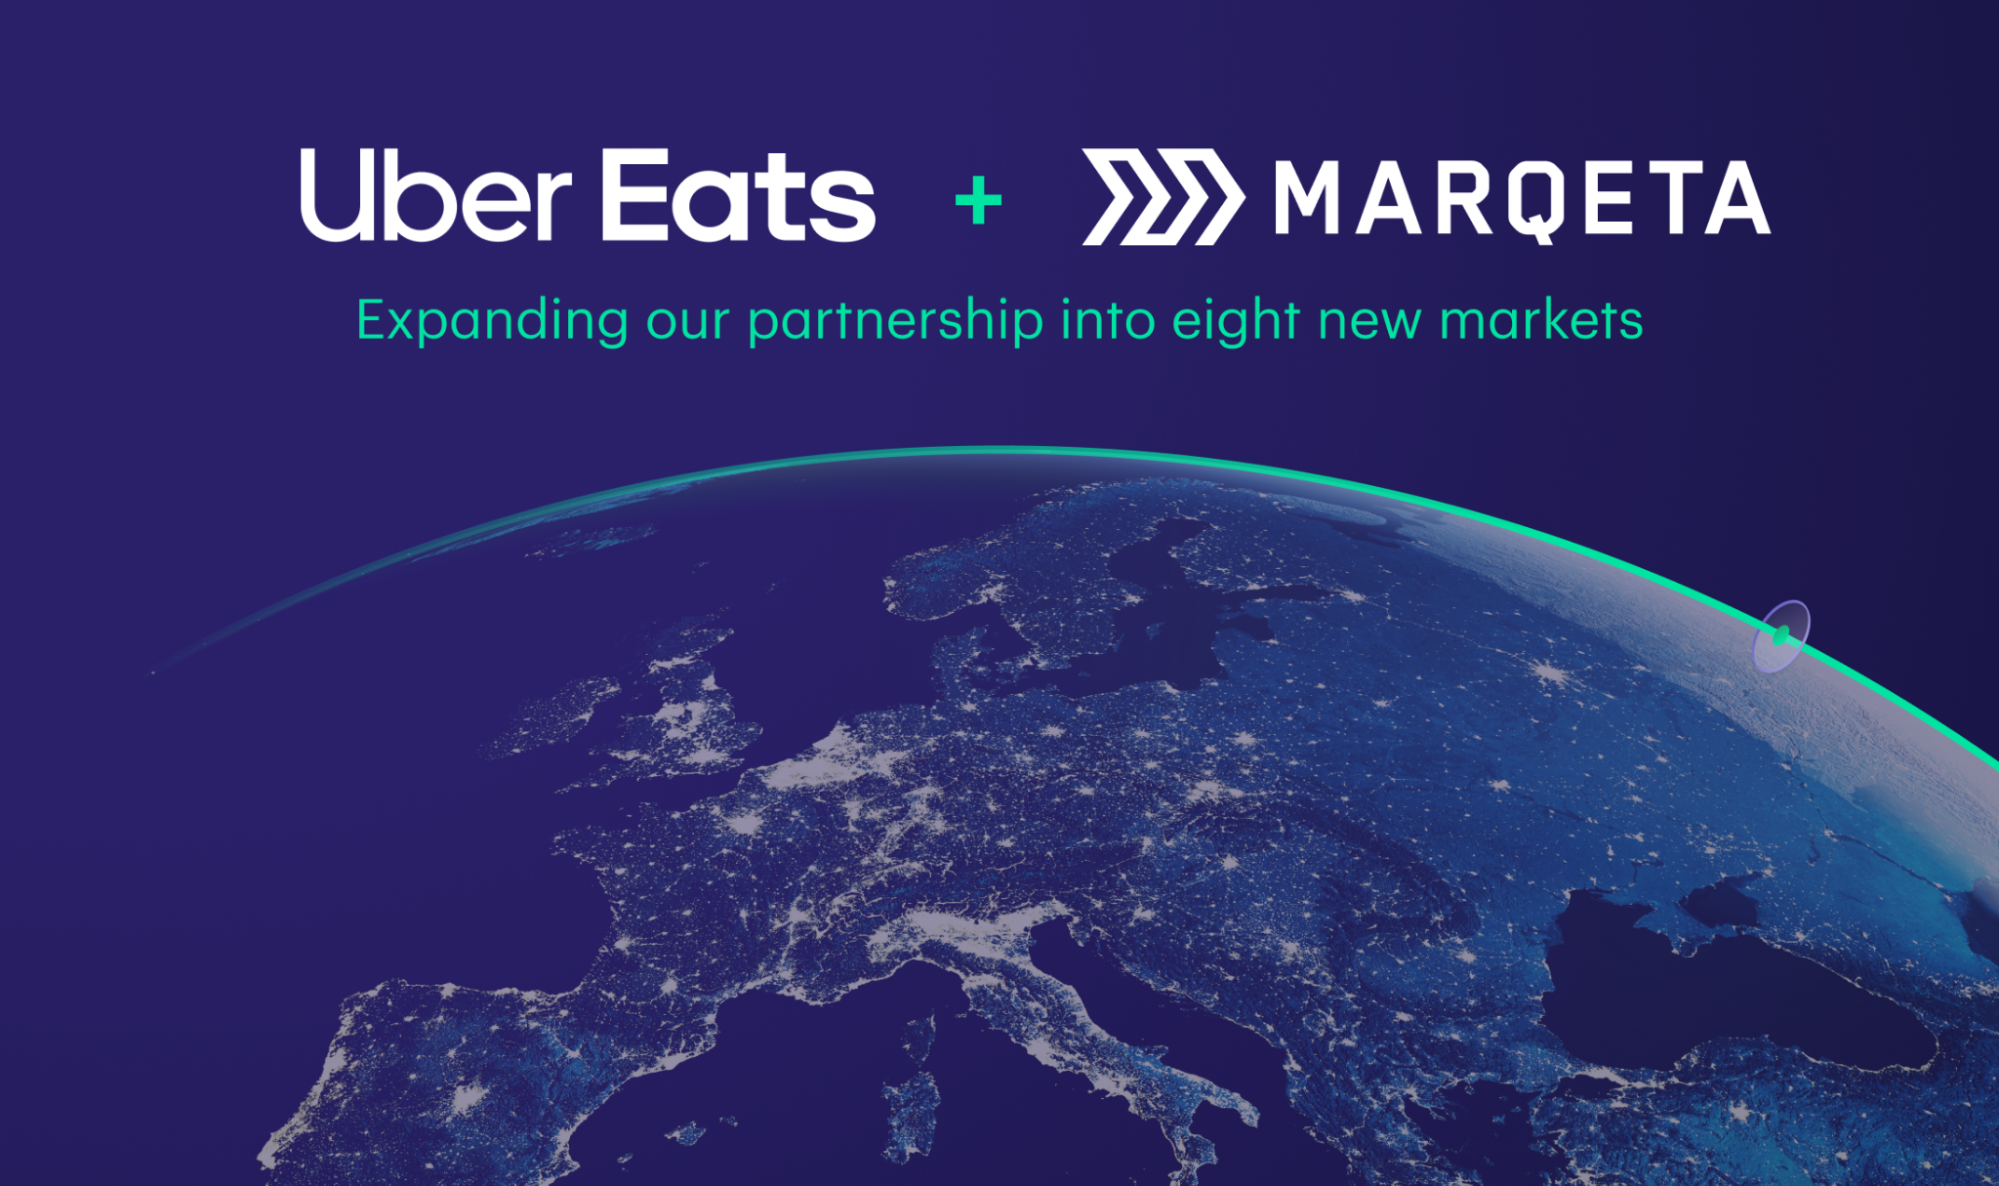 Marqeta Uber Eats’ Expansion